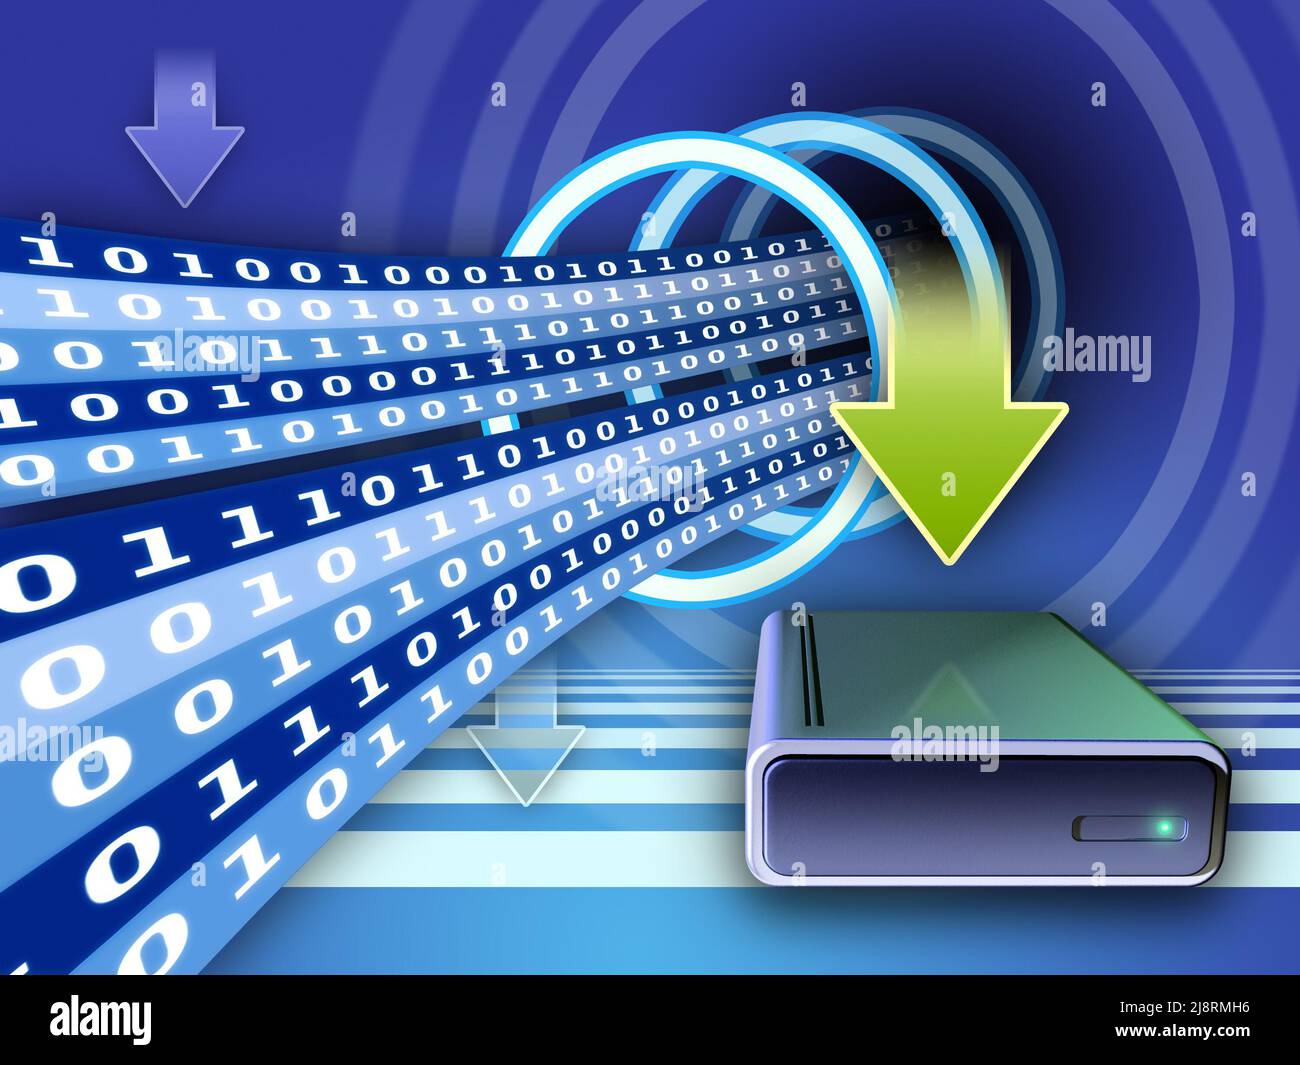 Writing data on an external hard disk. Digital illustration Stock Photo